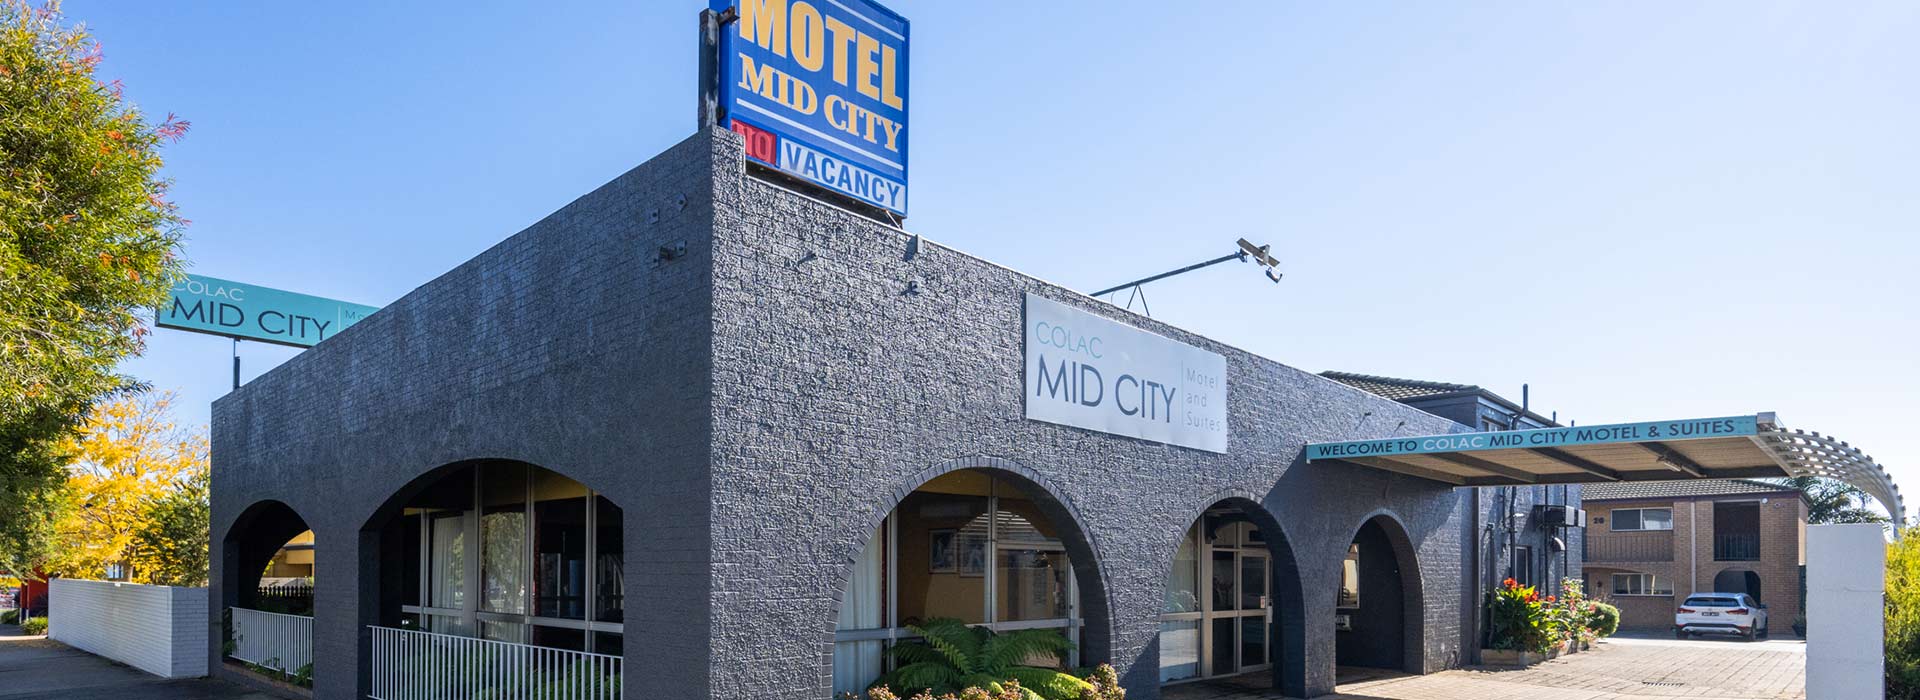 Colac Mid City Motel